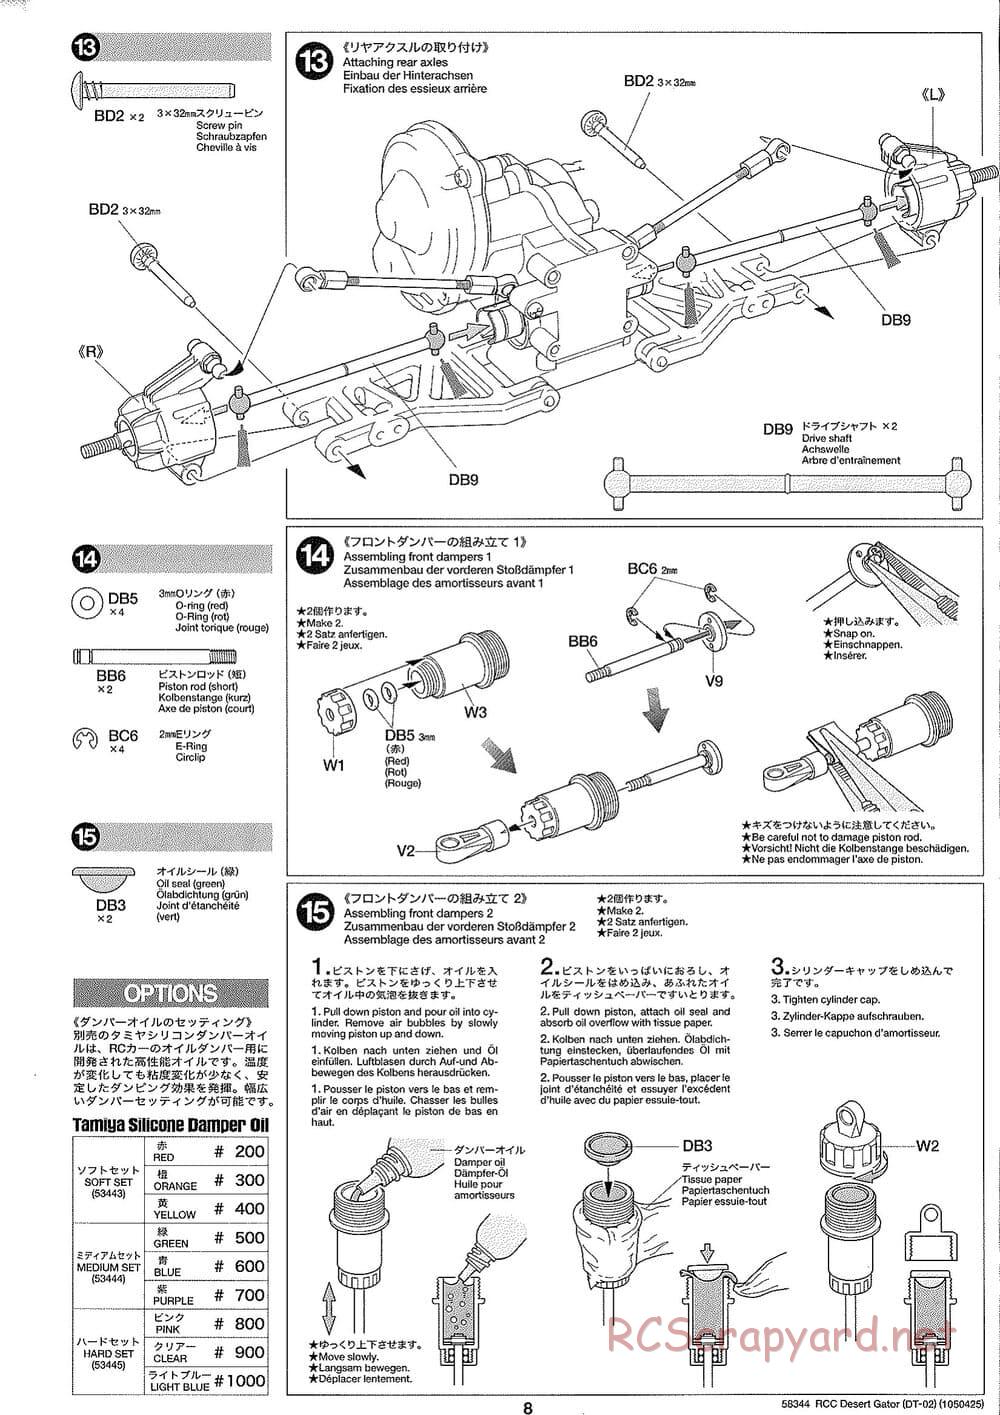 Tamiya - Desert Gator Chassis - Manual - Page 8